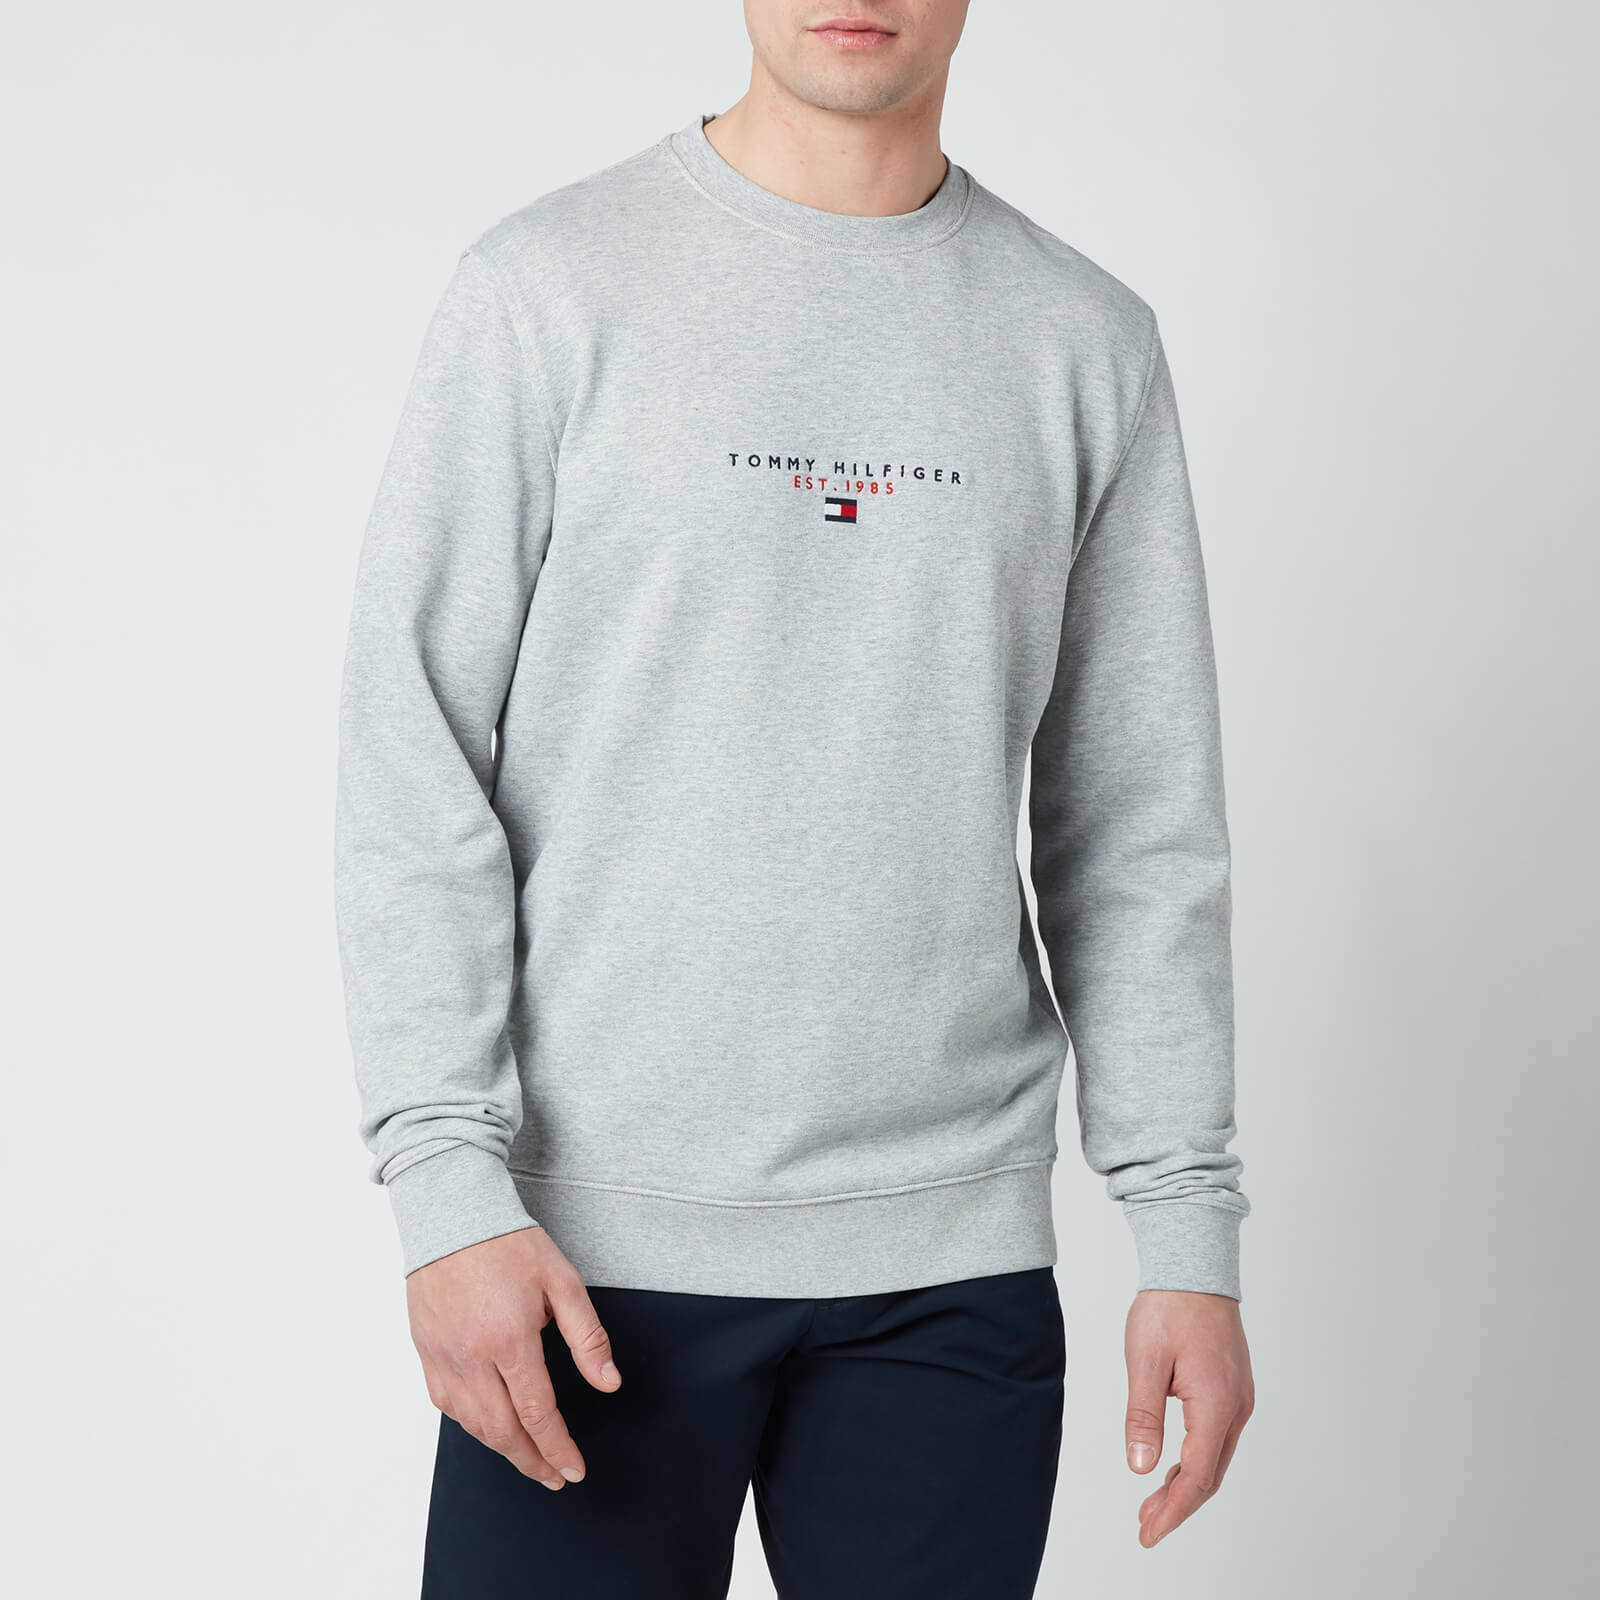 Tommy Hilfiger Men's Essential Crewneck Sweatshirt - Medium Grey Heather - S